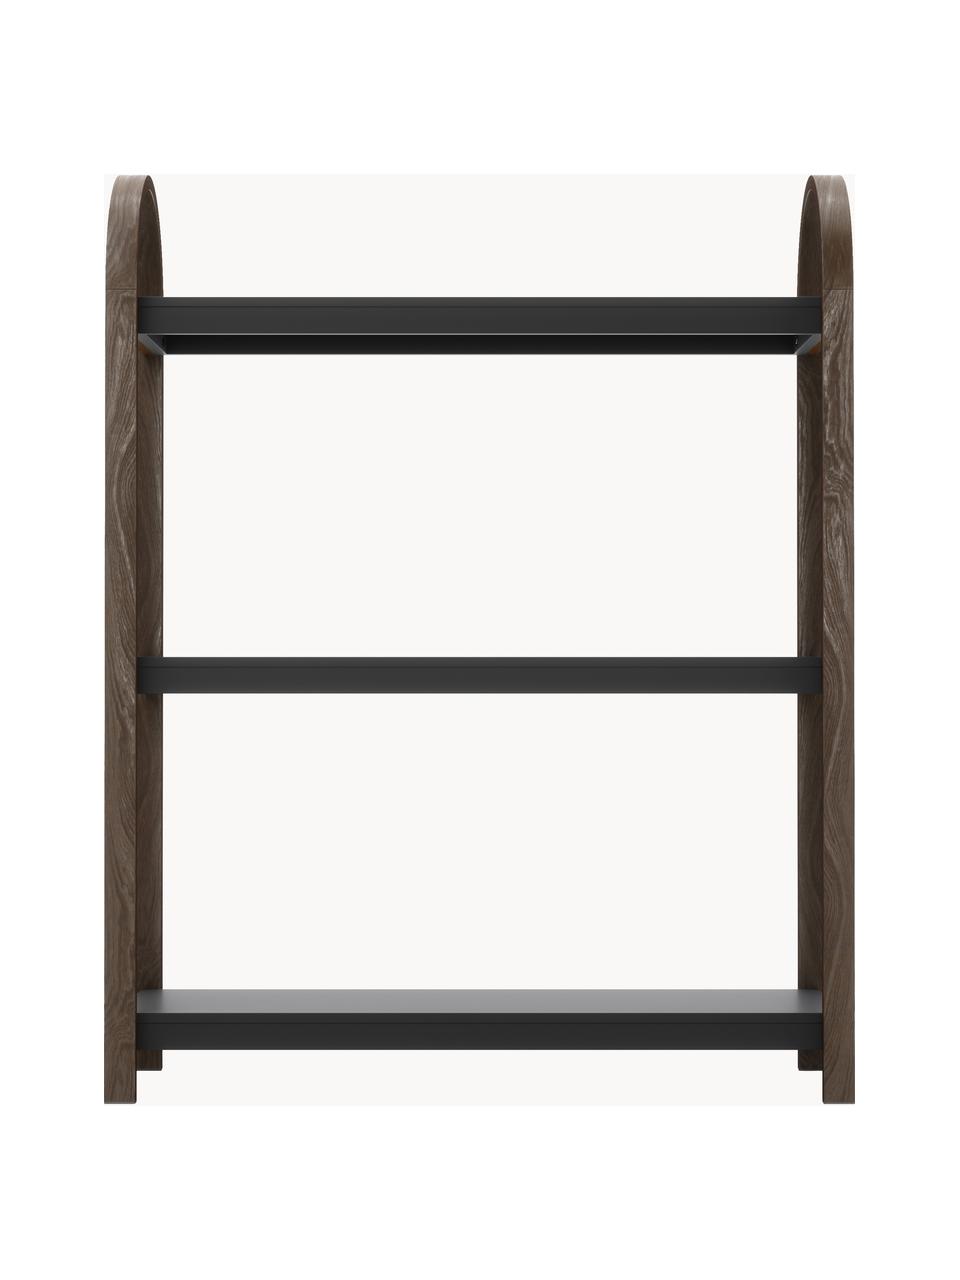 Wandkast Bellwood, Frame: hout, Plank: gecoat metaal, Zwart, donker hout, B 72 x H 90 cm